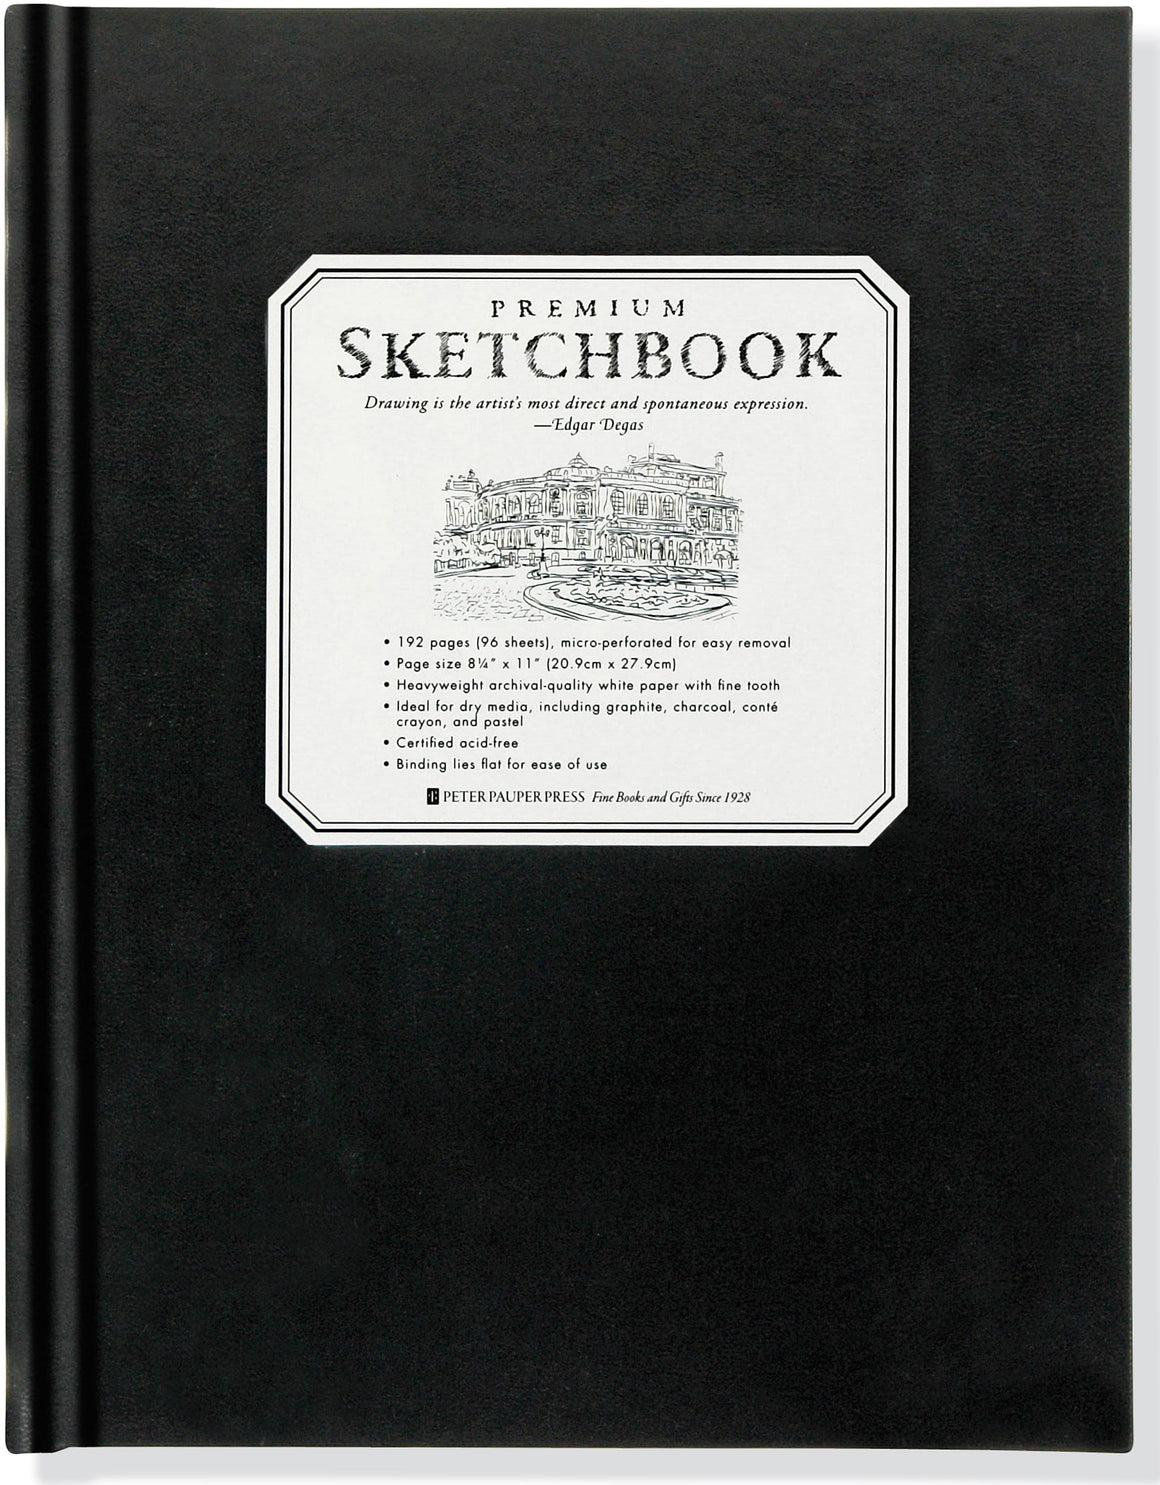 Studio Series - Premium Sketchbook - Large, White Pages